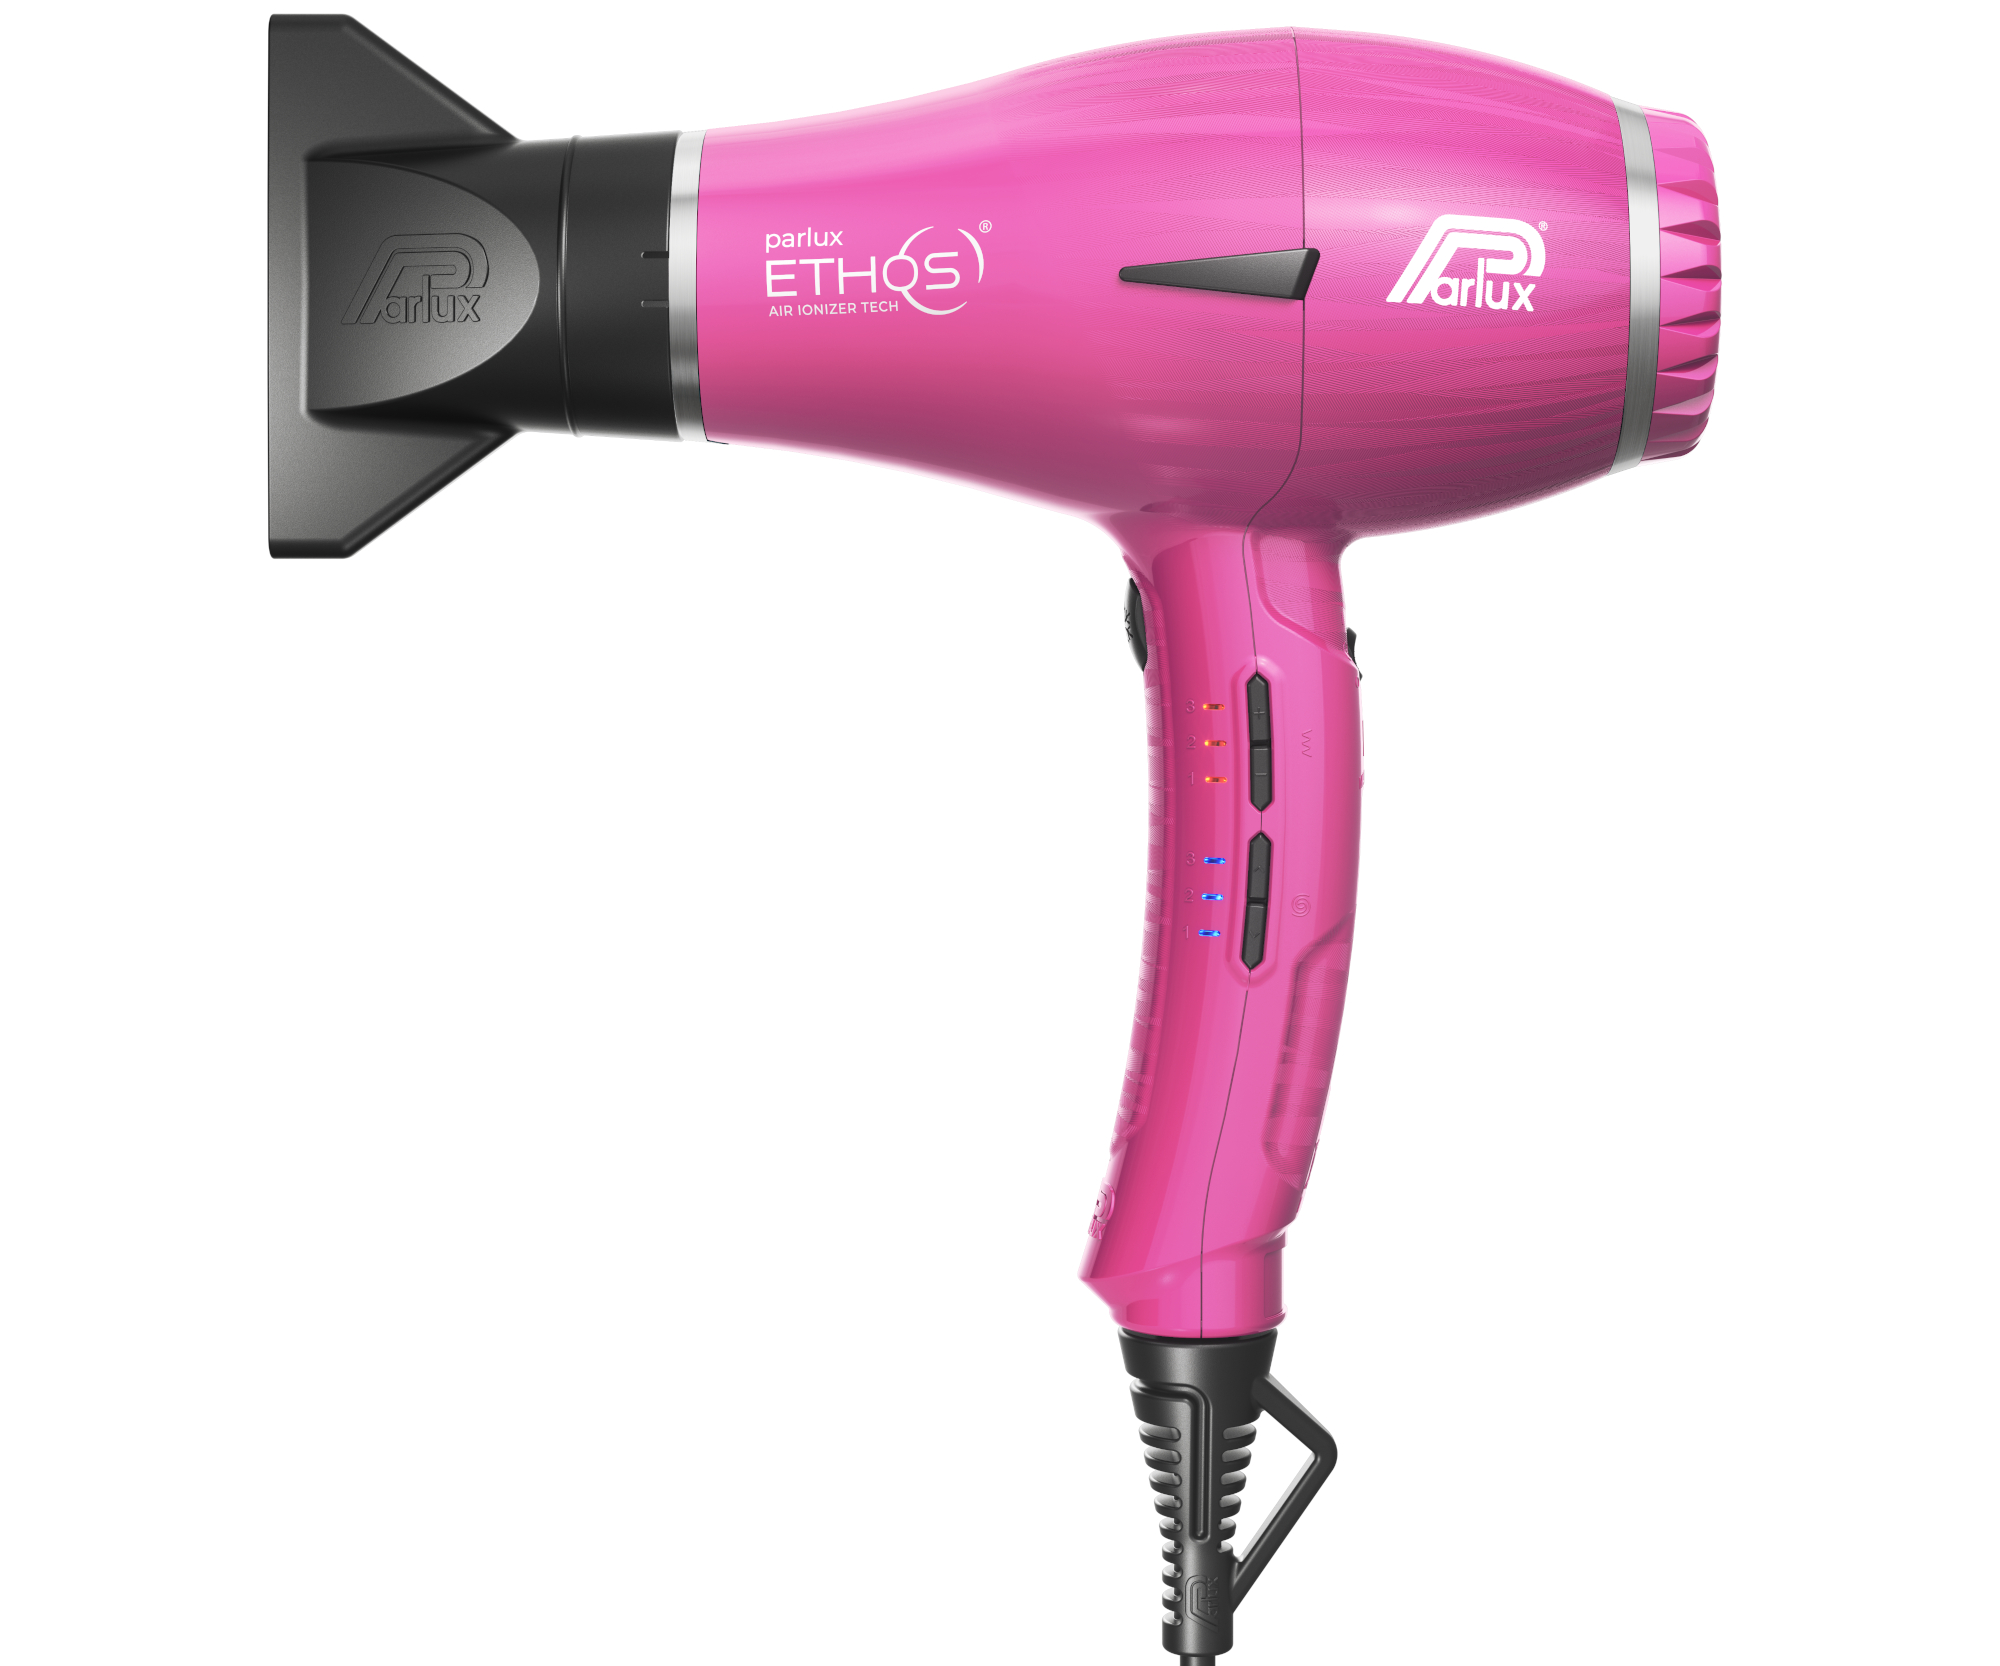 Profesionální fén na vlasy Parlux Ethos - 2300 W, růžový + dárek zdarma